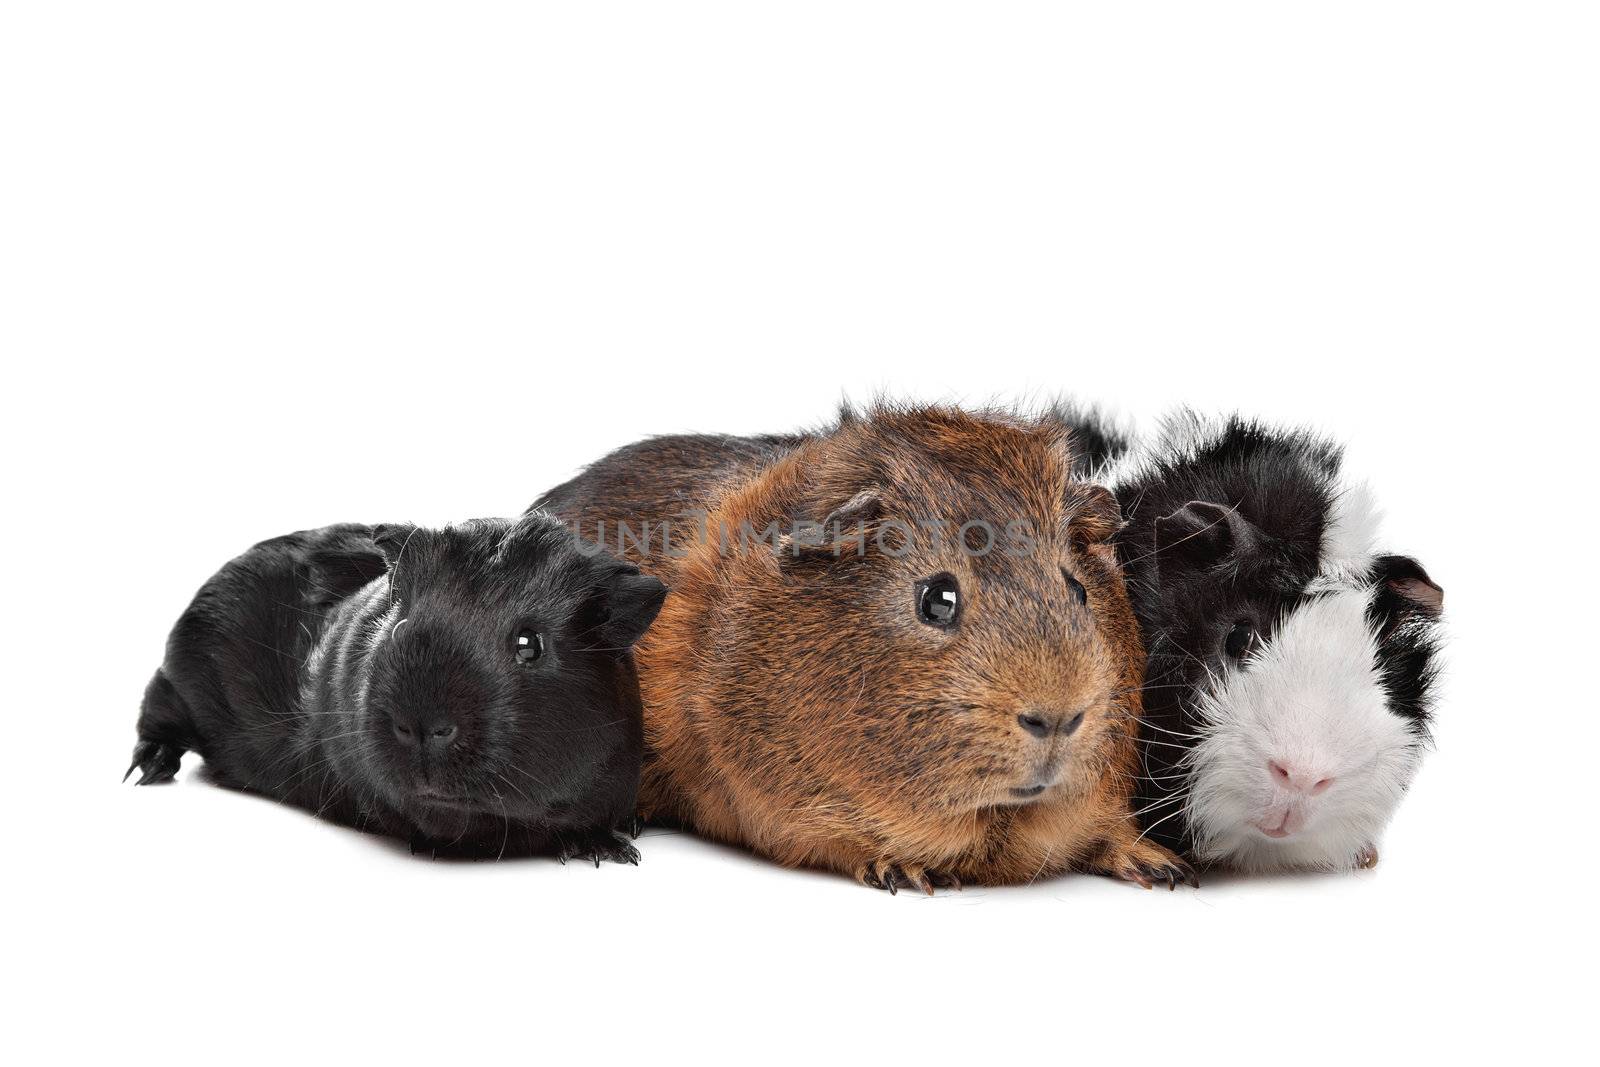 three Guinea pigs by eriklam